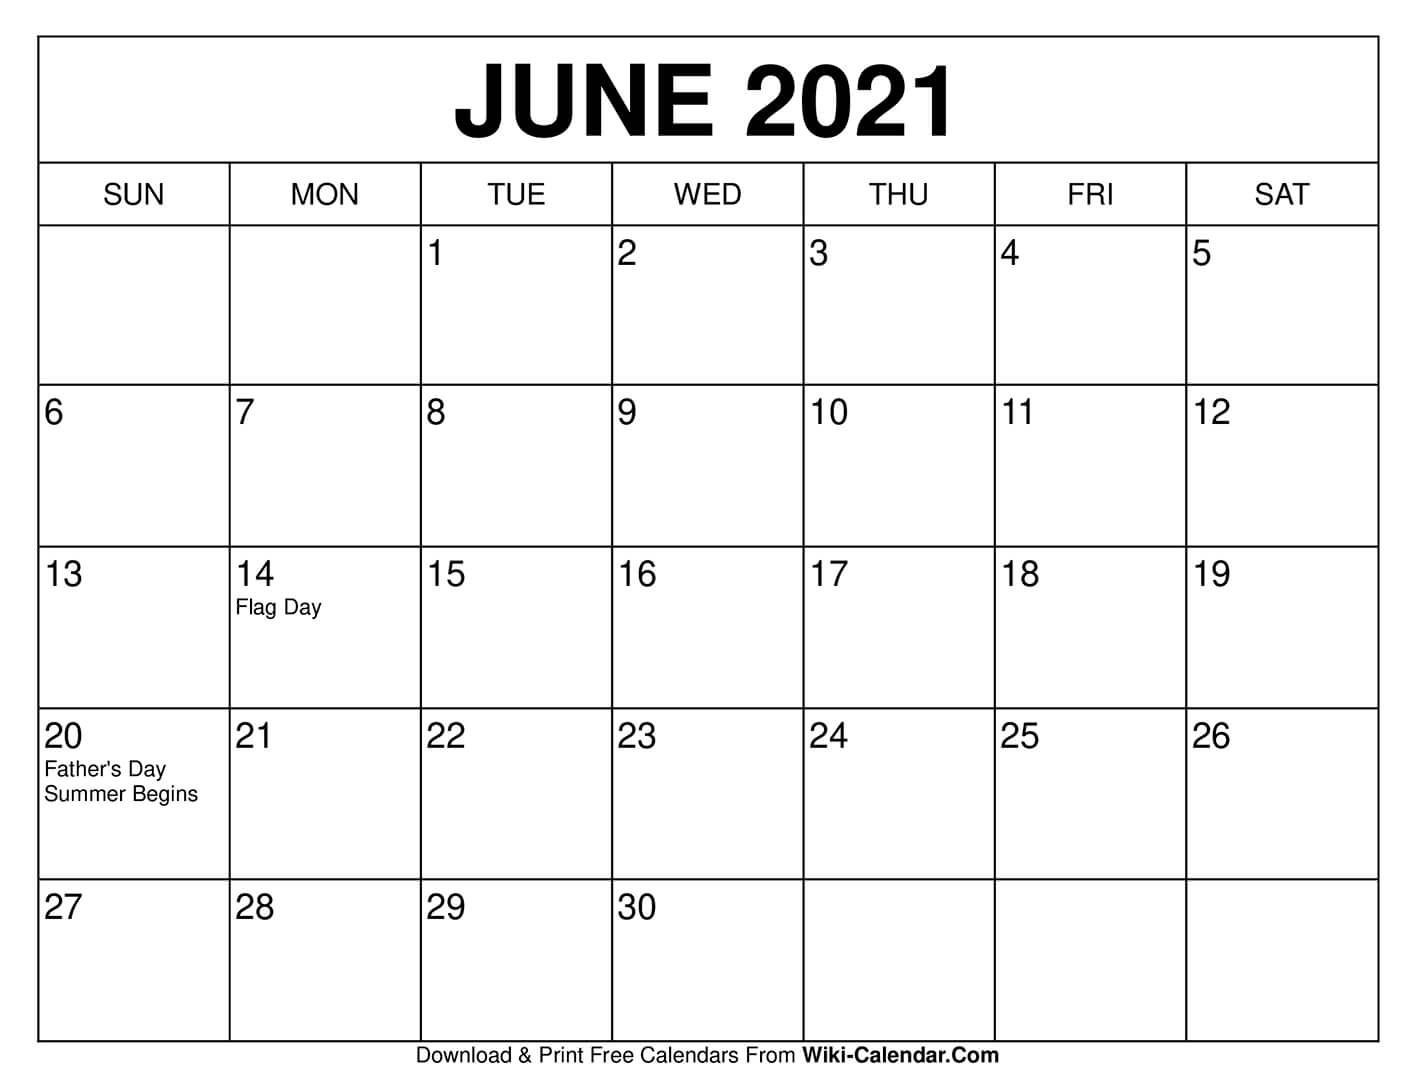 June 2021 Calendar | Calendar Printables, Free Calendars To-Free June 2021 Calendar Templates Printable